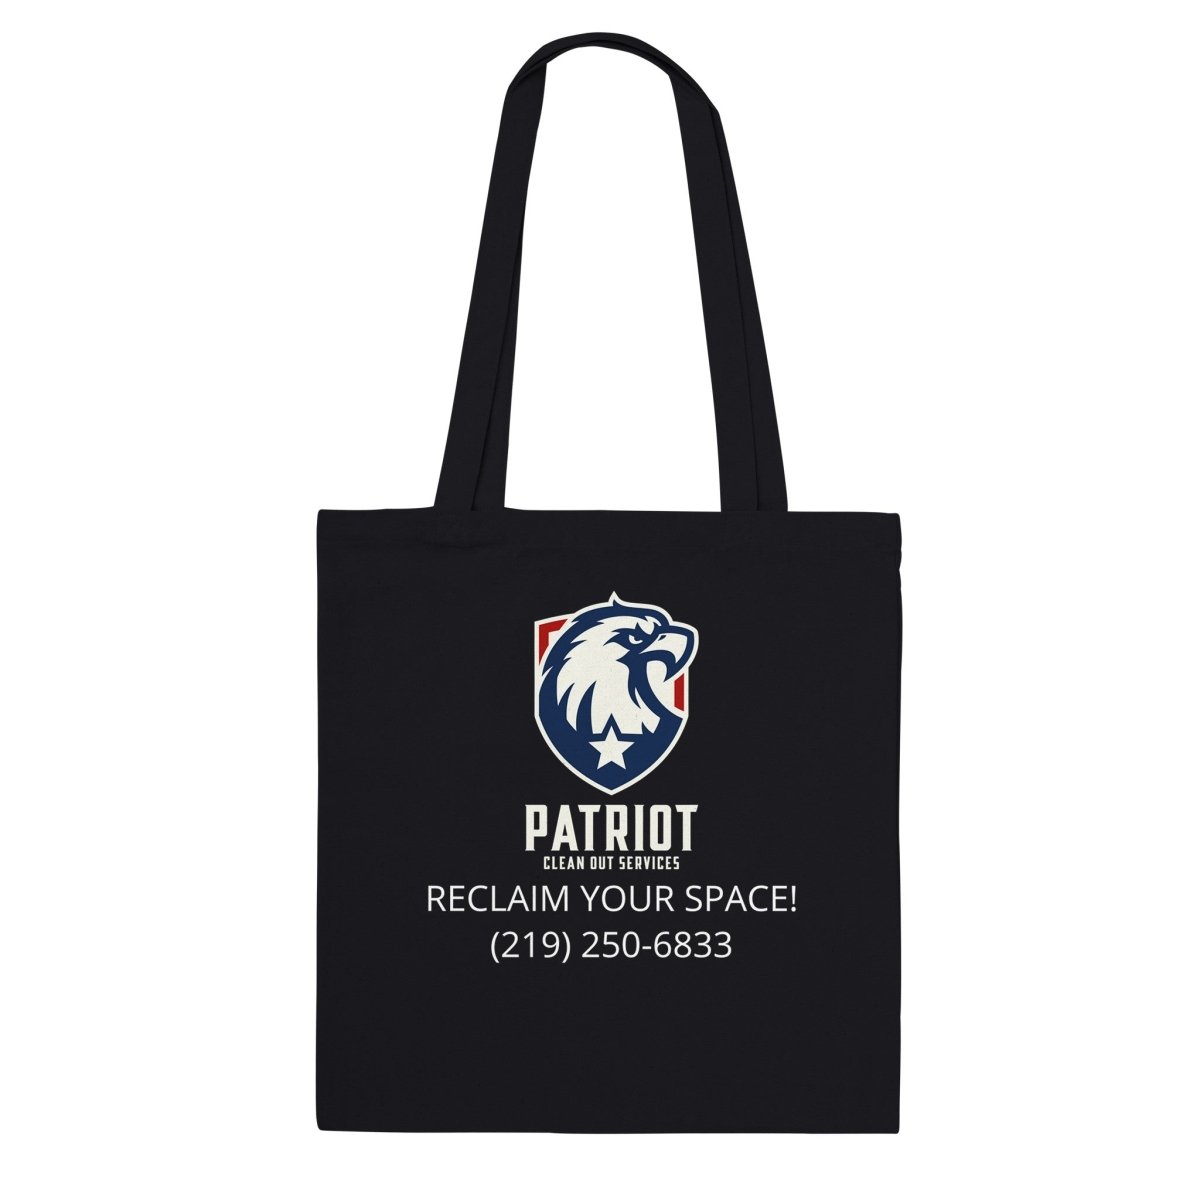 Patriotic Tote Bag with Patriot Clean Out Logo and long handles - Print Material - Black